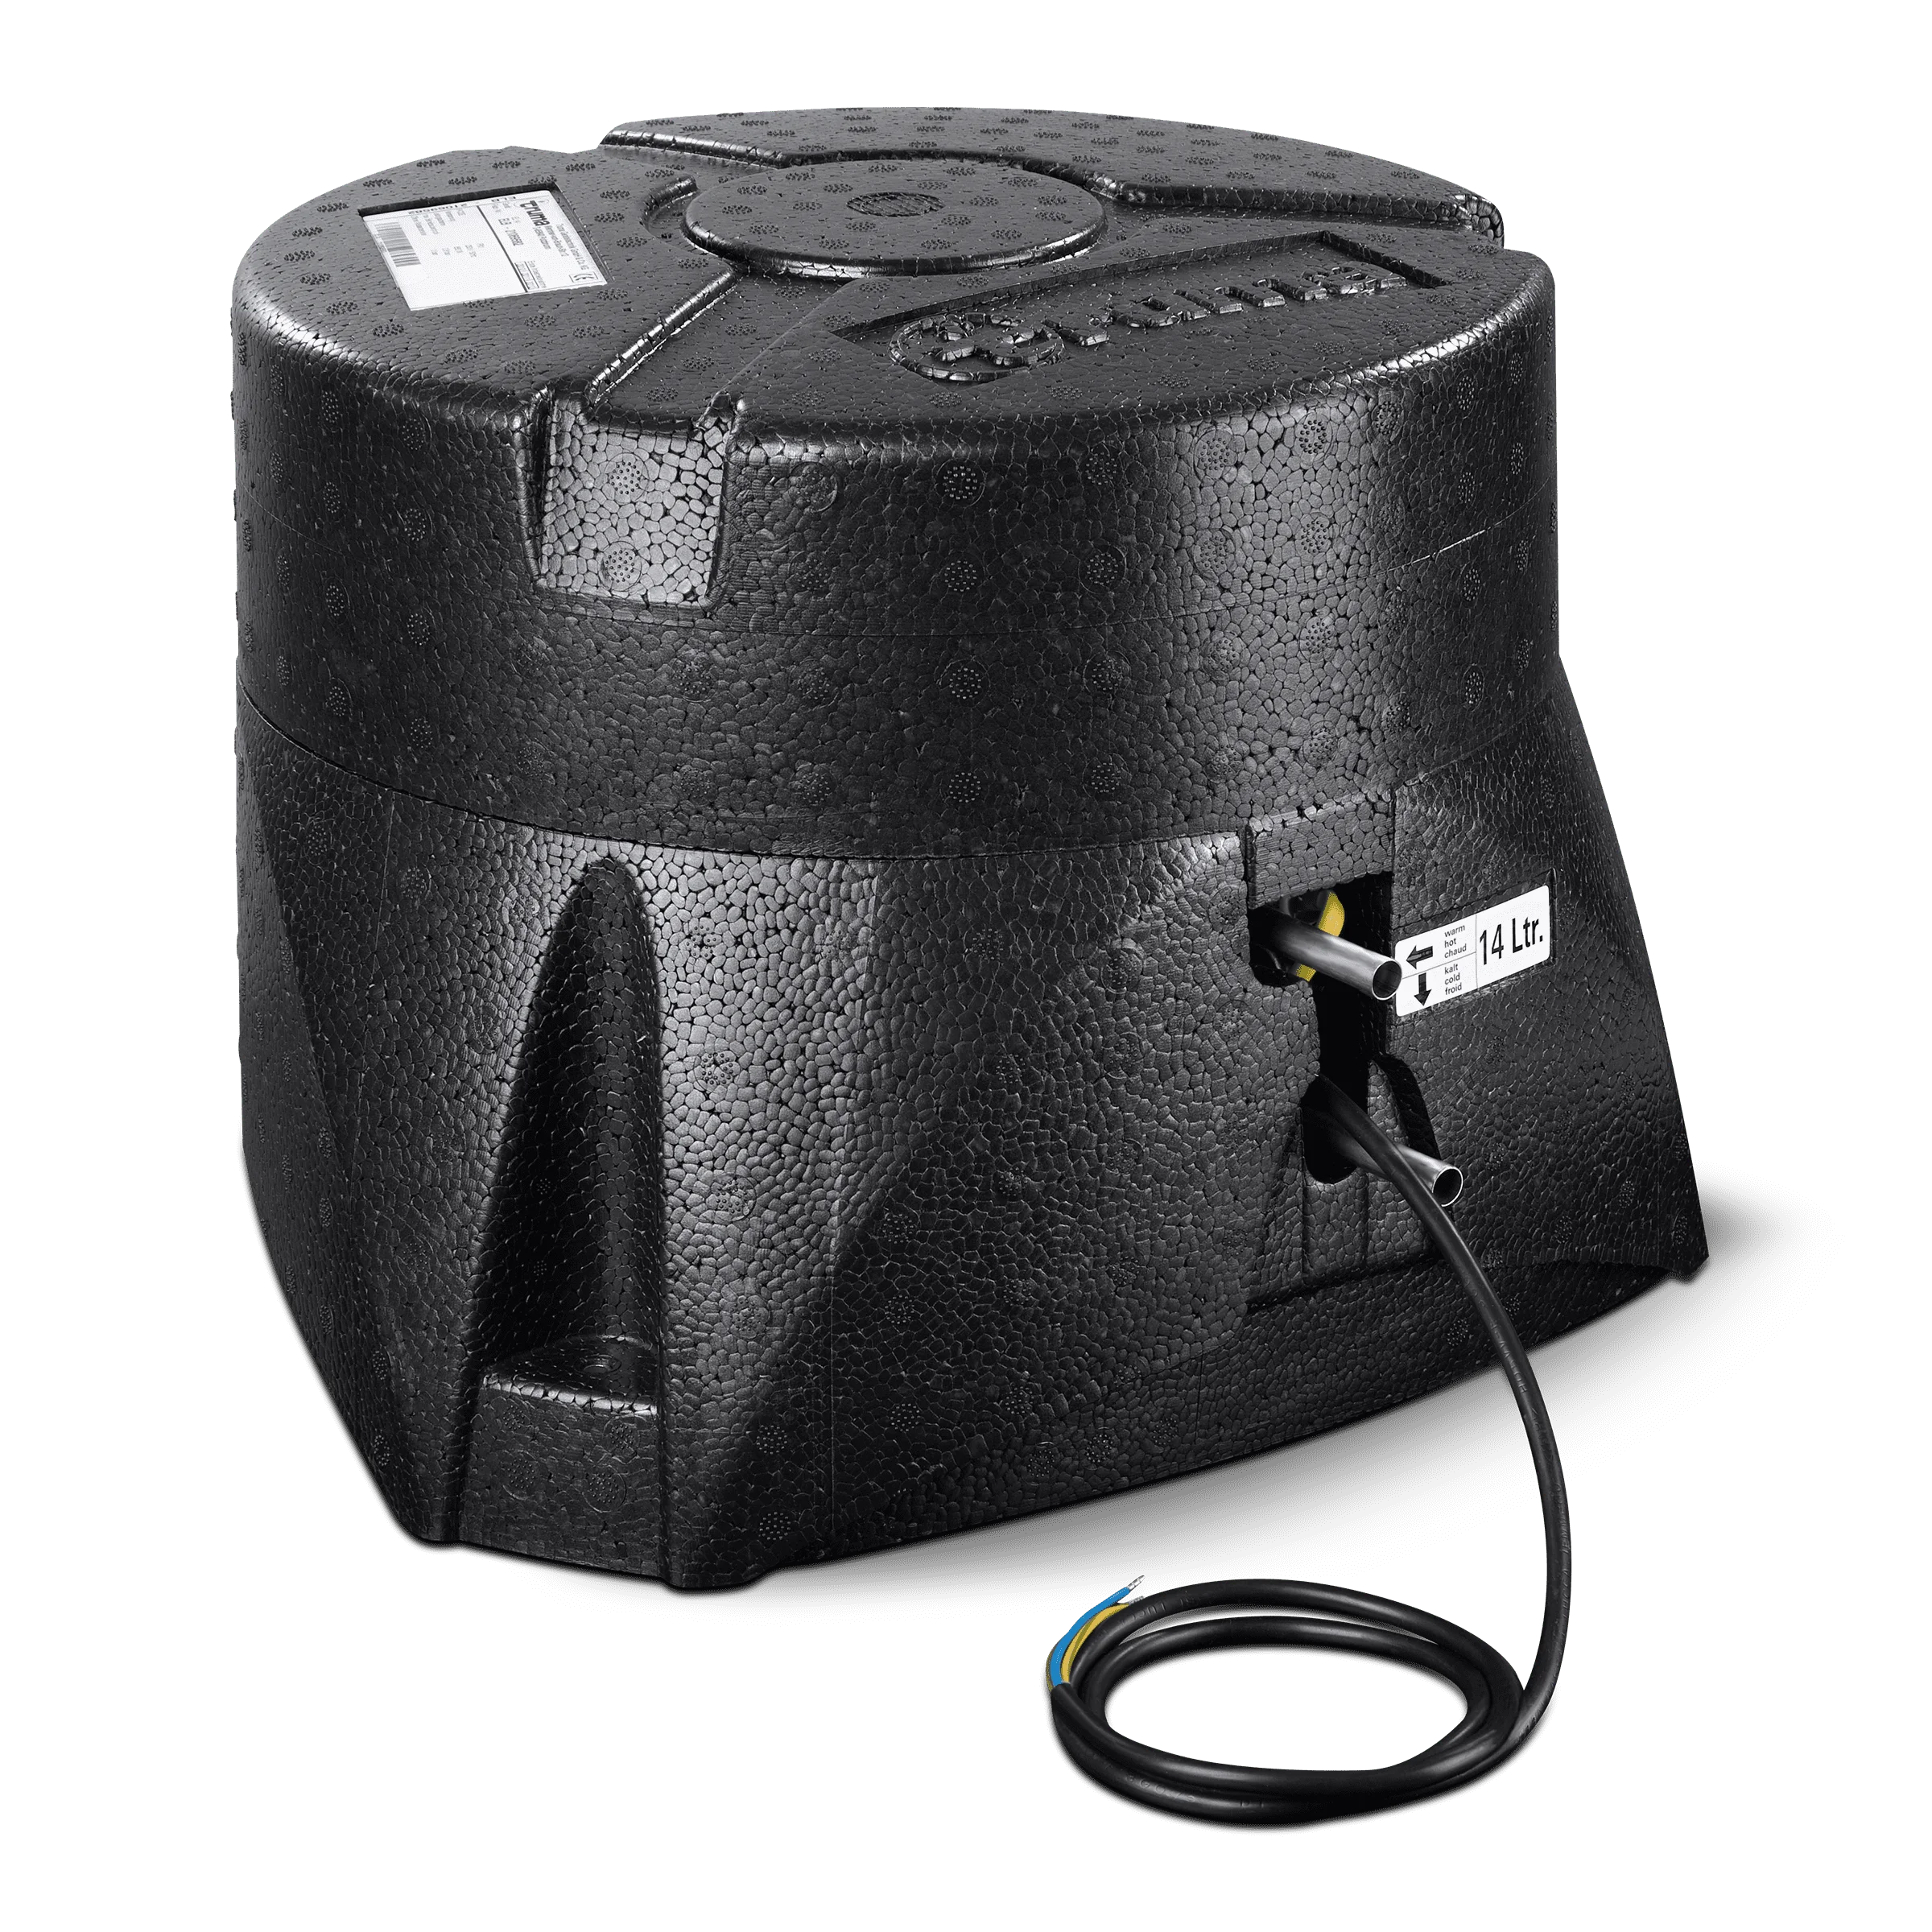 Truma electric water heater